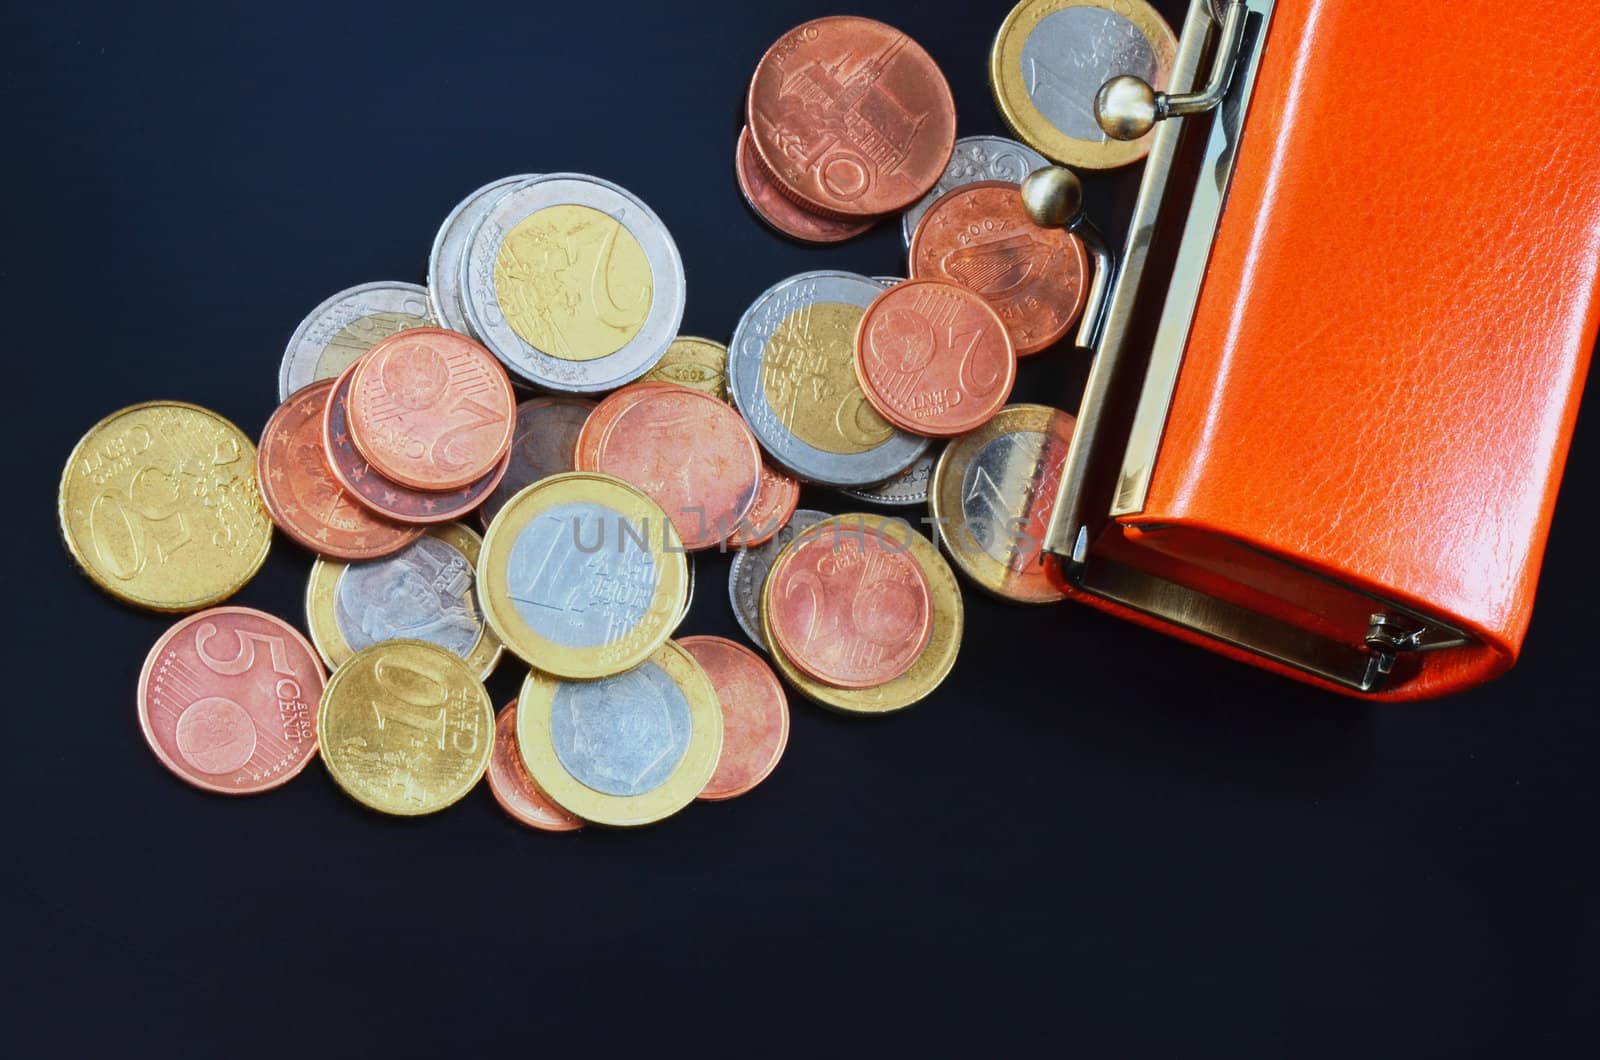 European coins droped around open purse